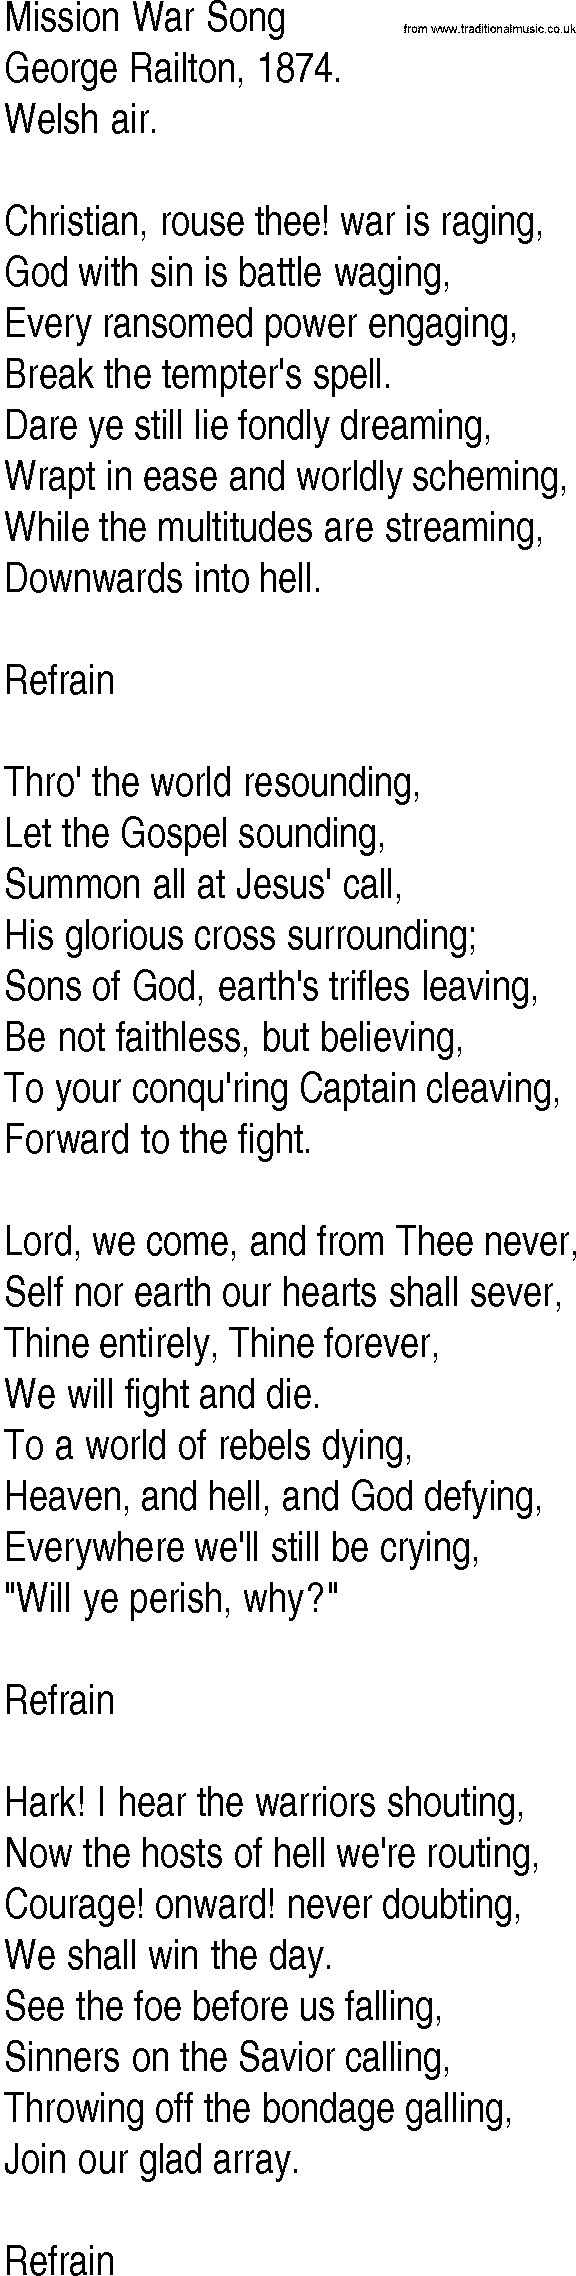 Hymn and Gospel Song: Mission War Song by George Railton lyrics